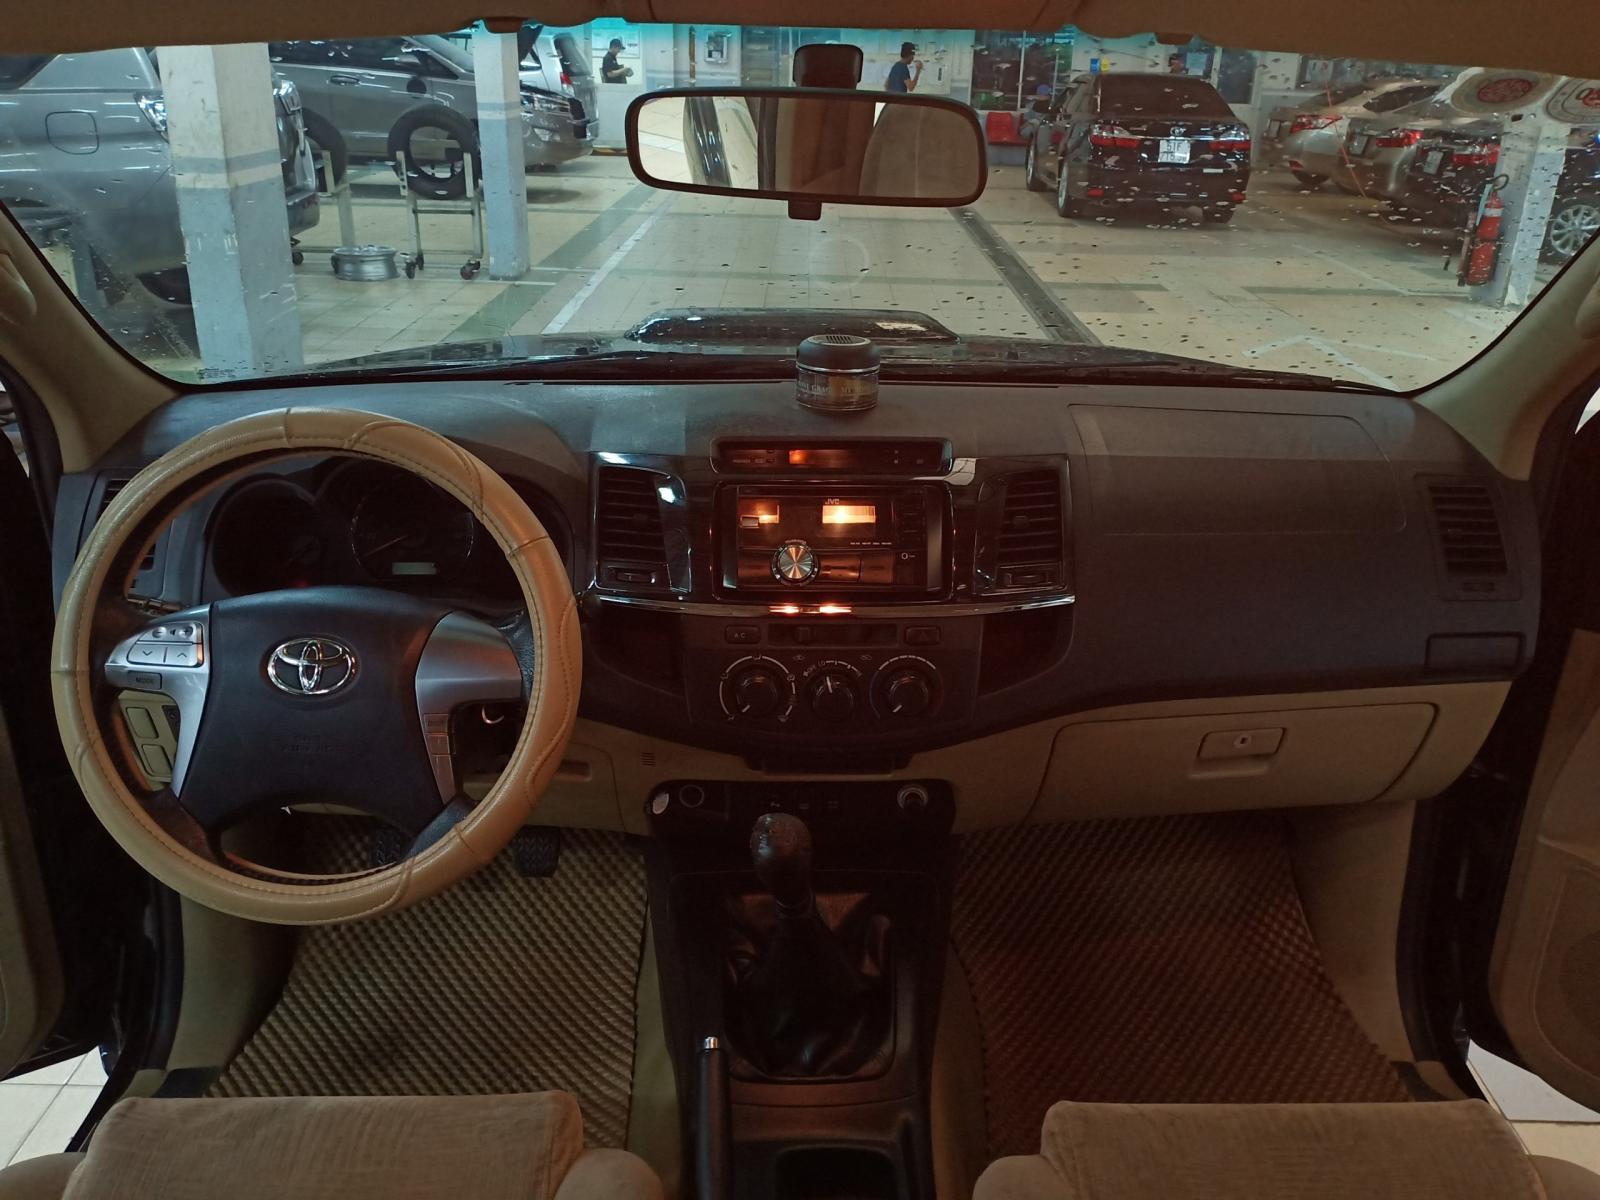 Toyota Fortuner 2.4G 2015 - Bán Toyota Fortuner 2.4G 2015, màu đen, giá ưu đãi